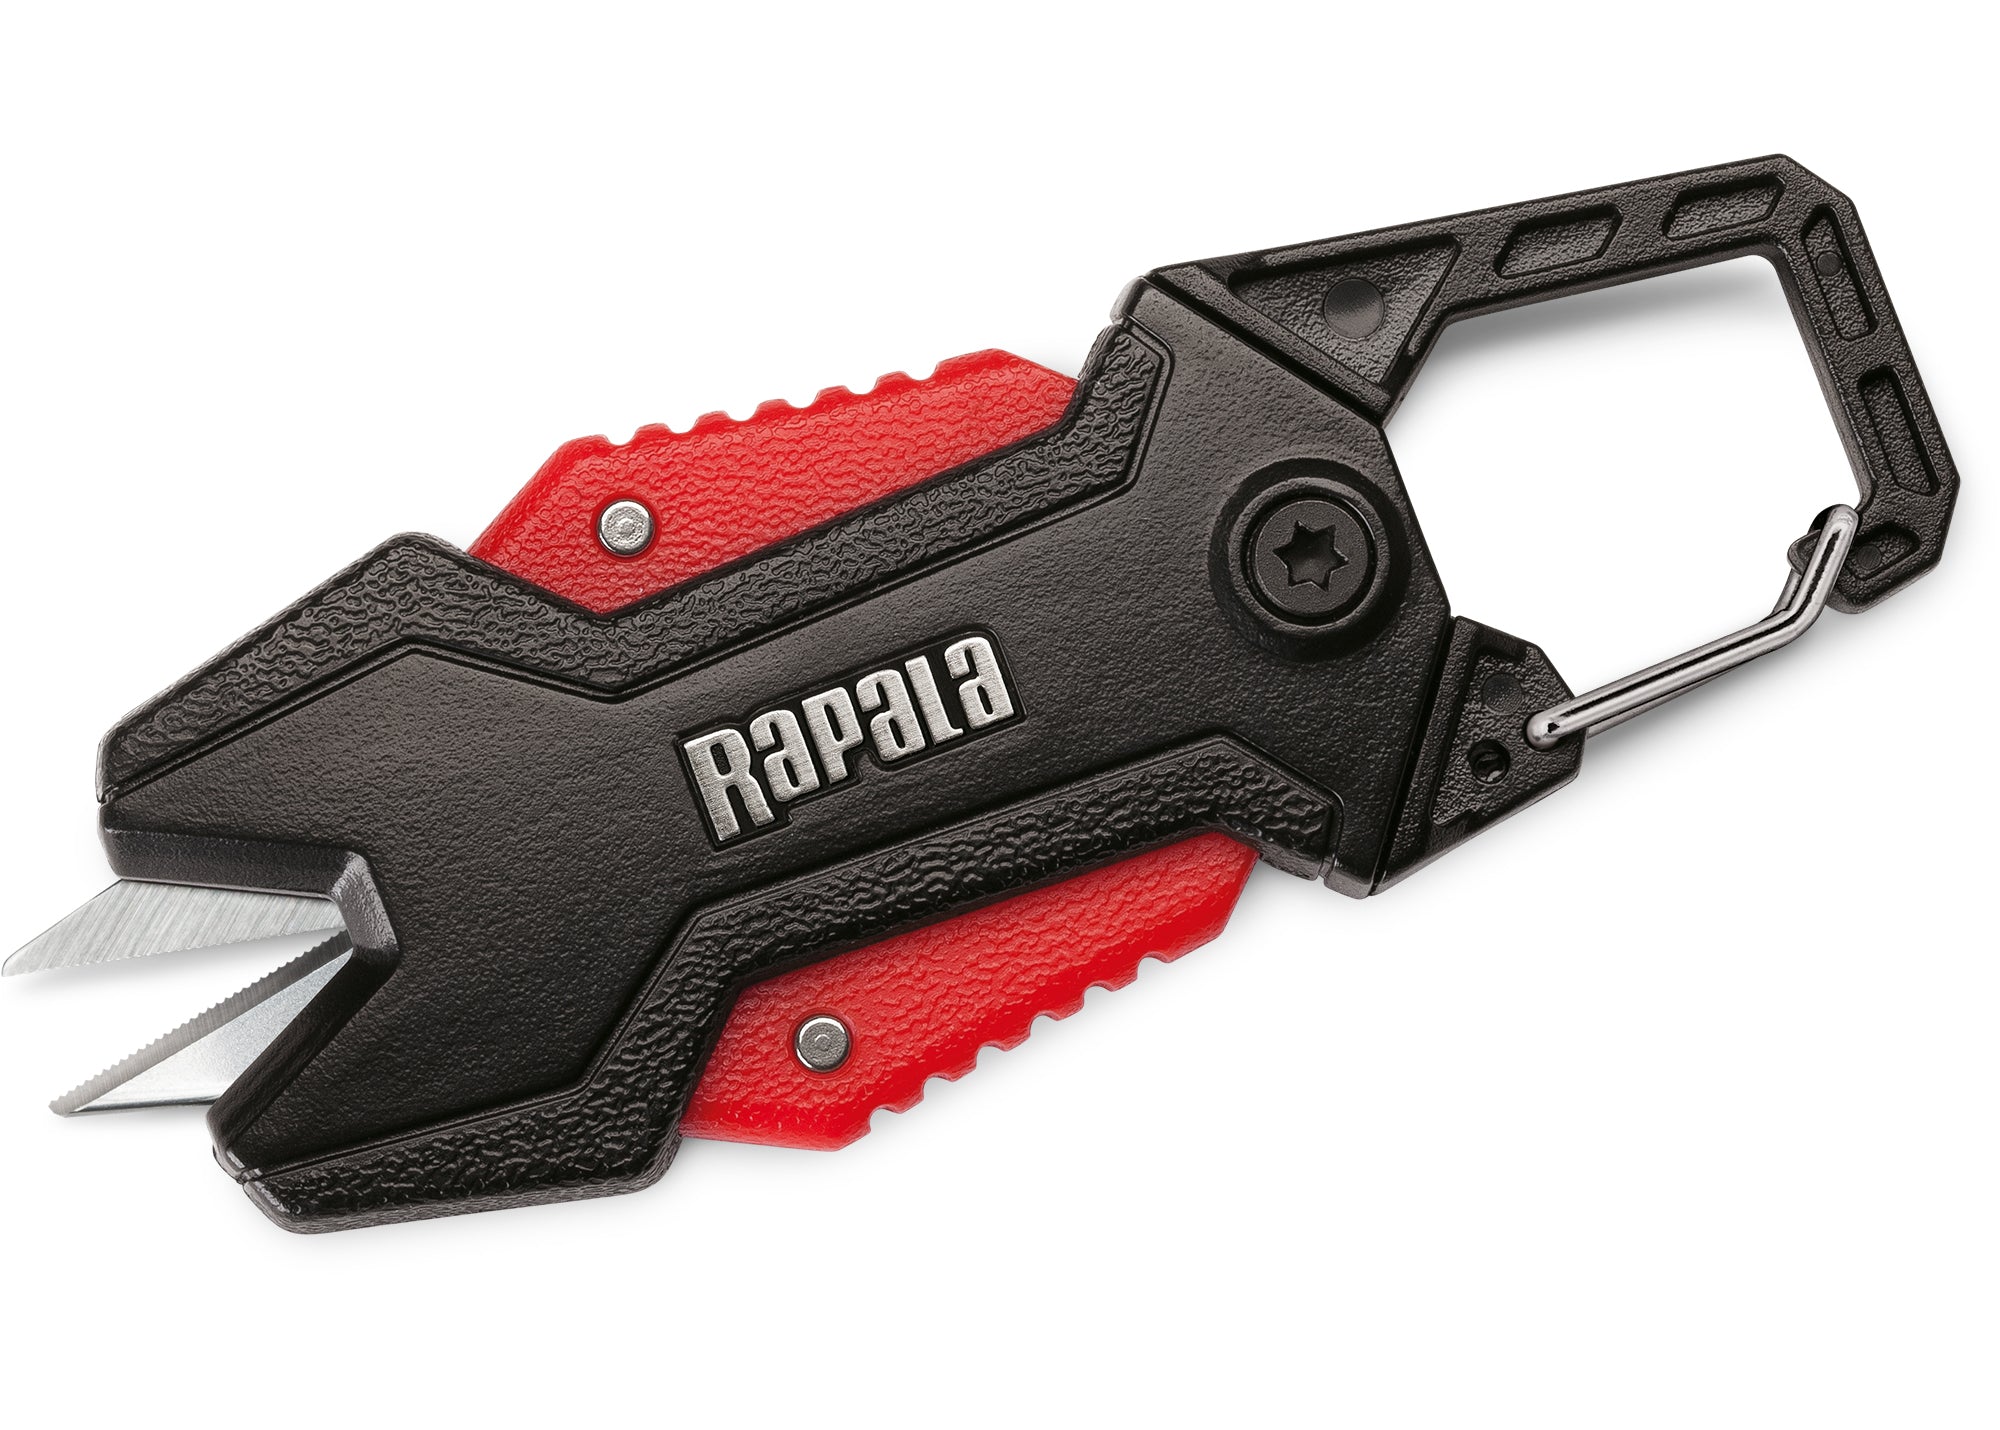 Rapala Retractable Line Scissor With Carabiner Attachment